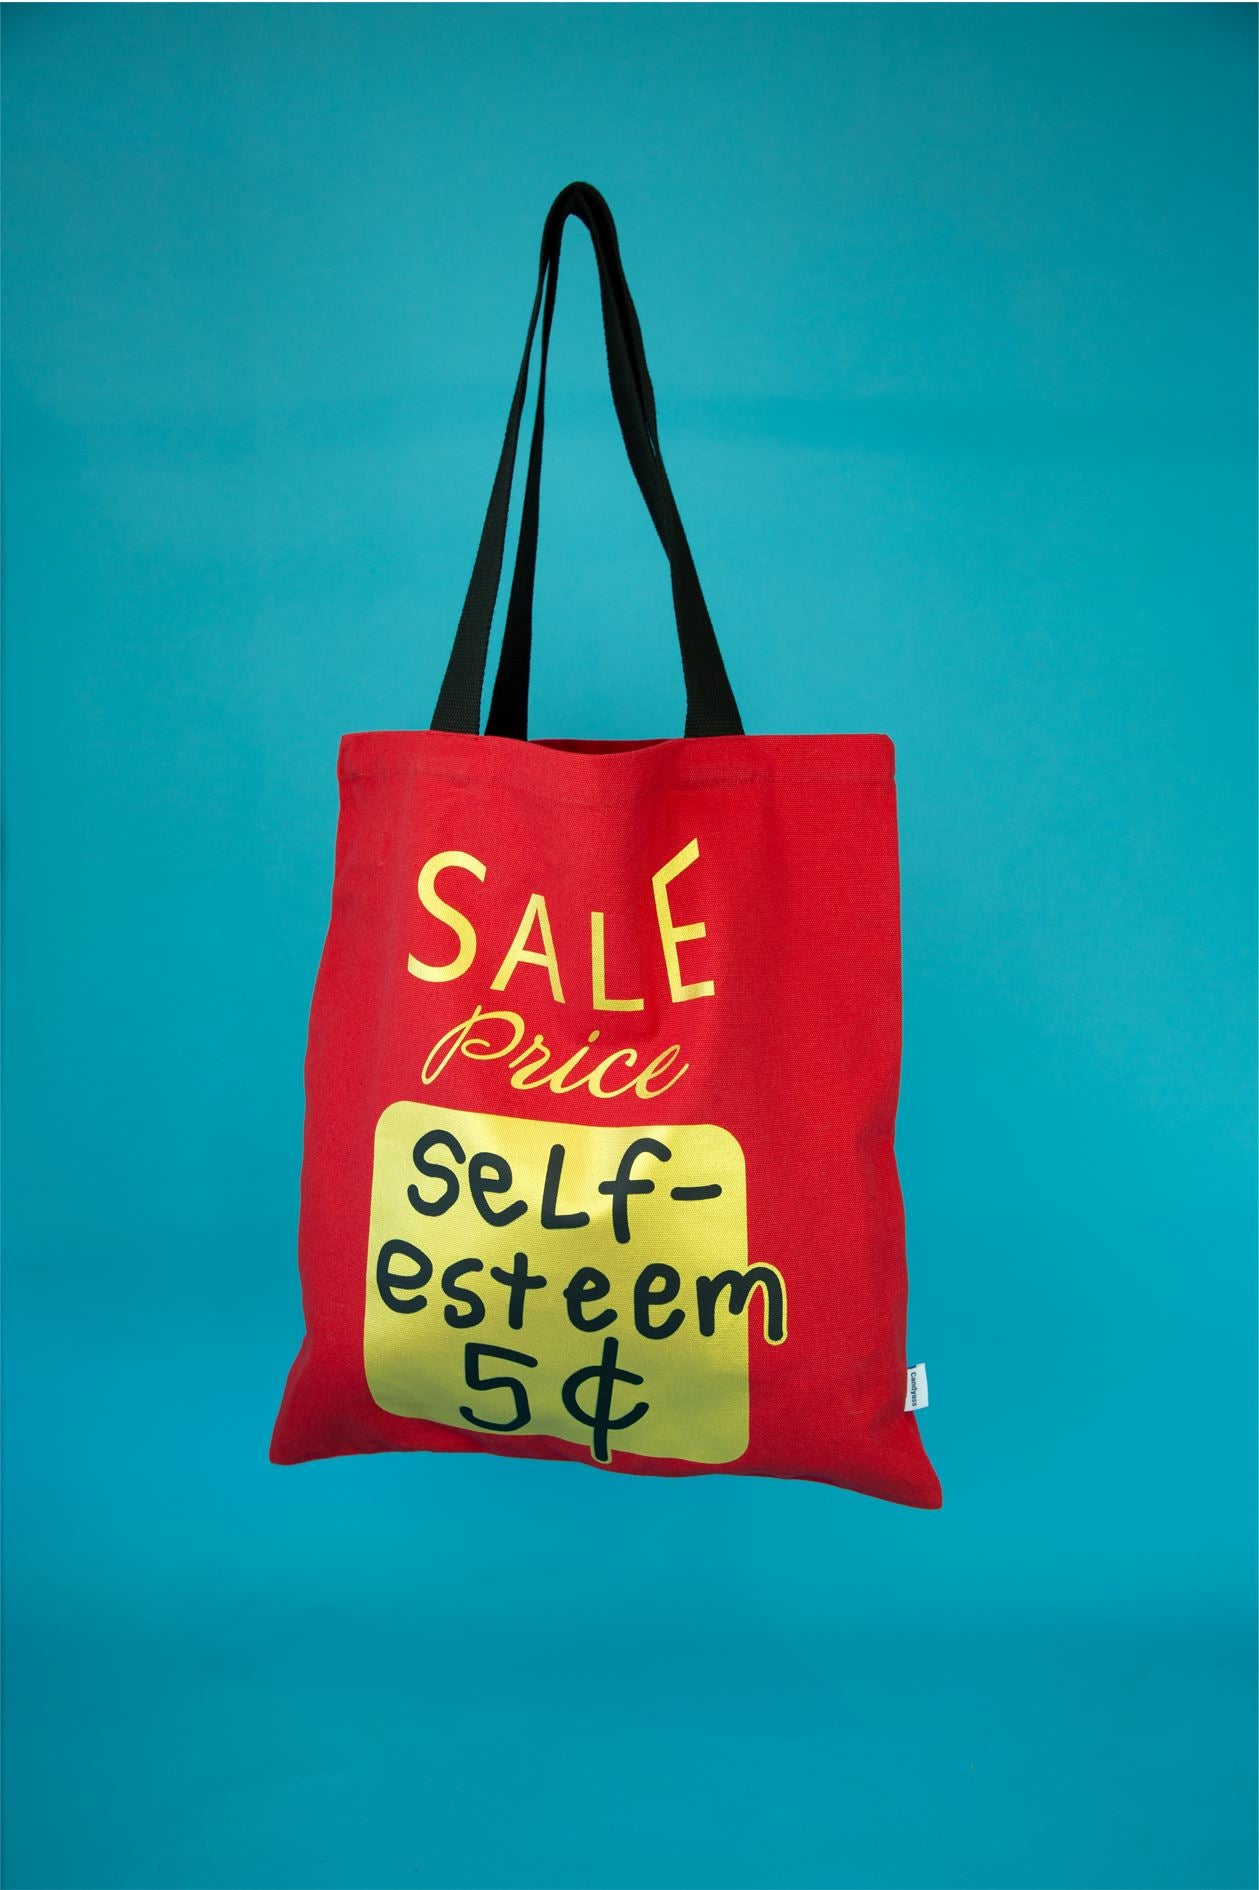 Self Esteem 5c Tote Bag x Candyass - Third Drawer Down